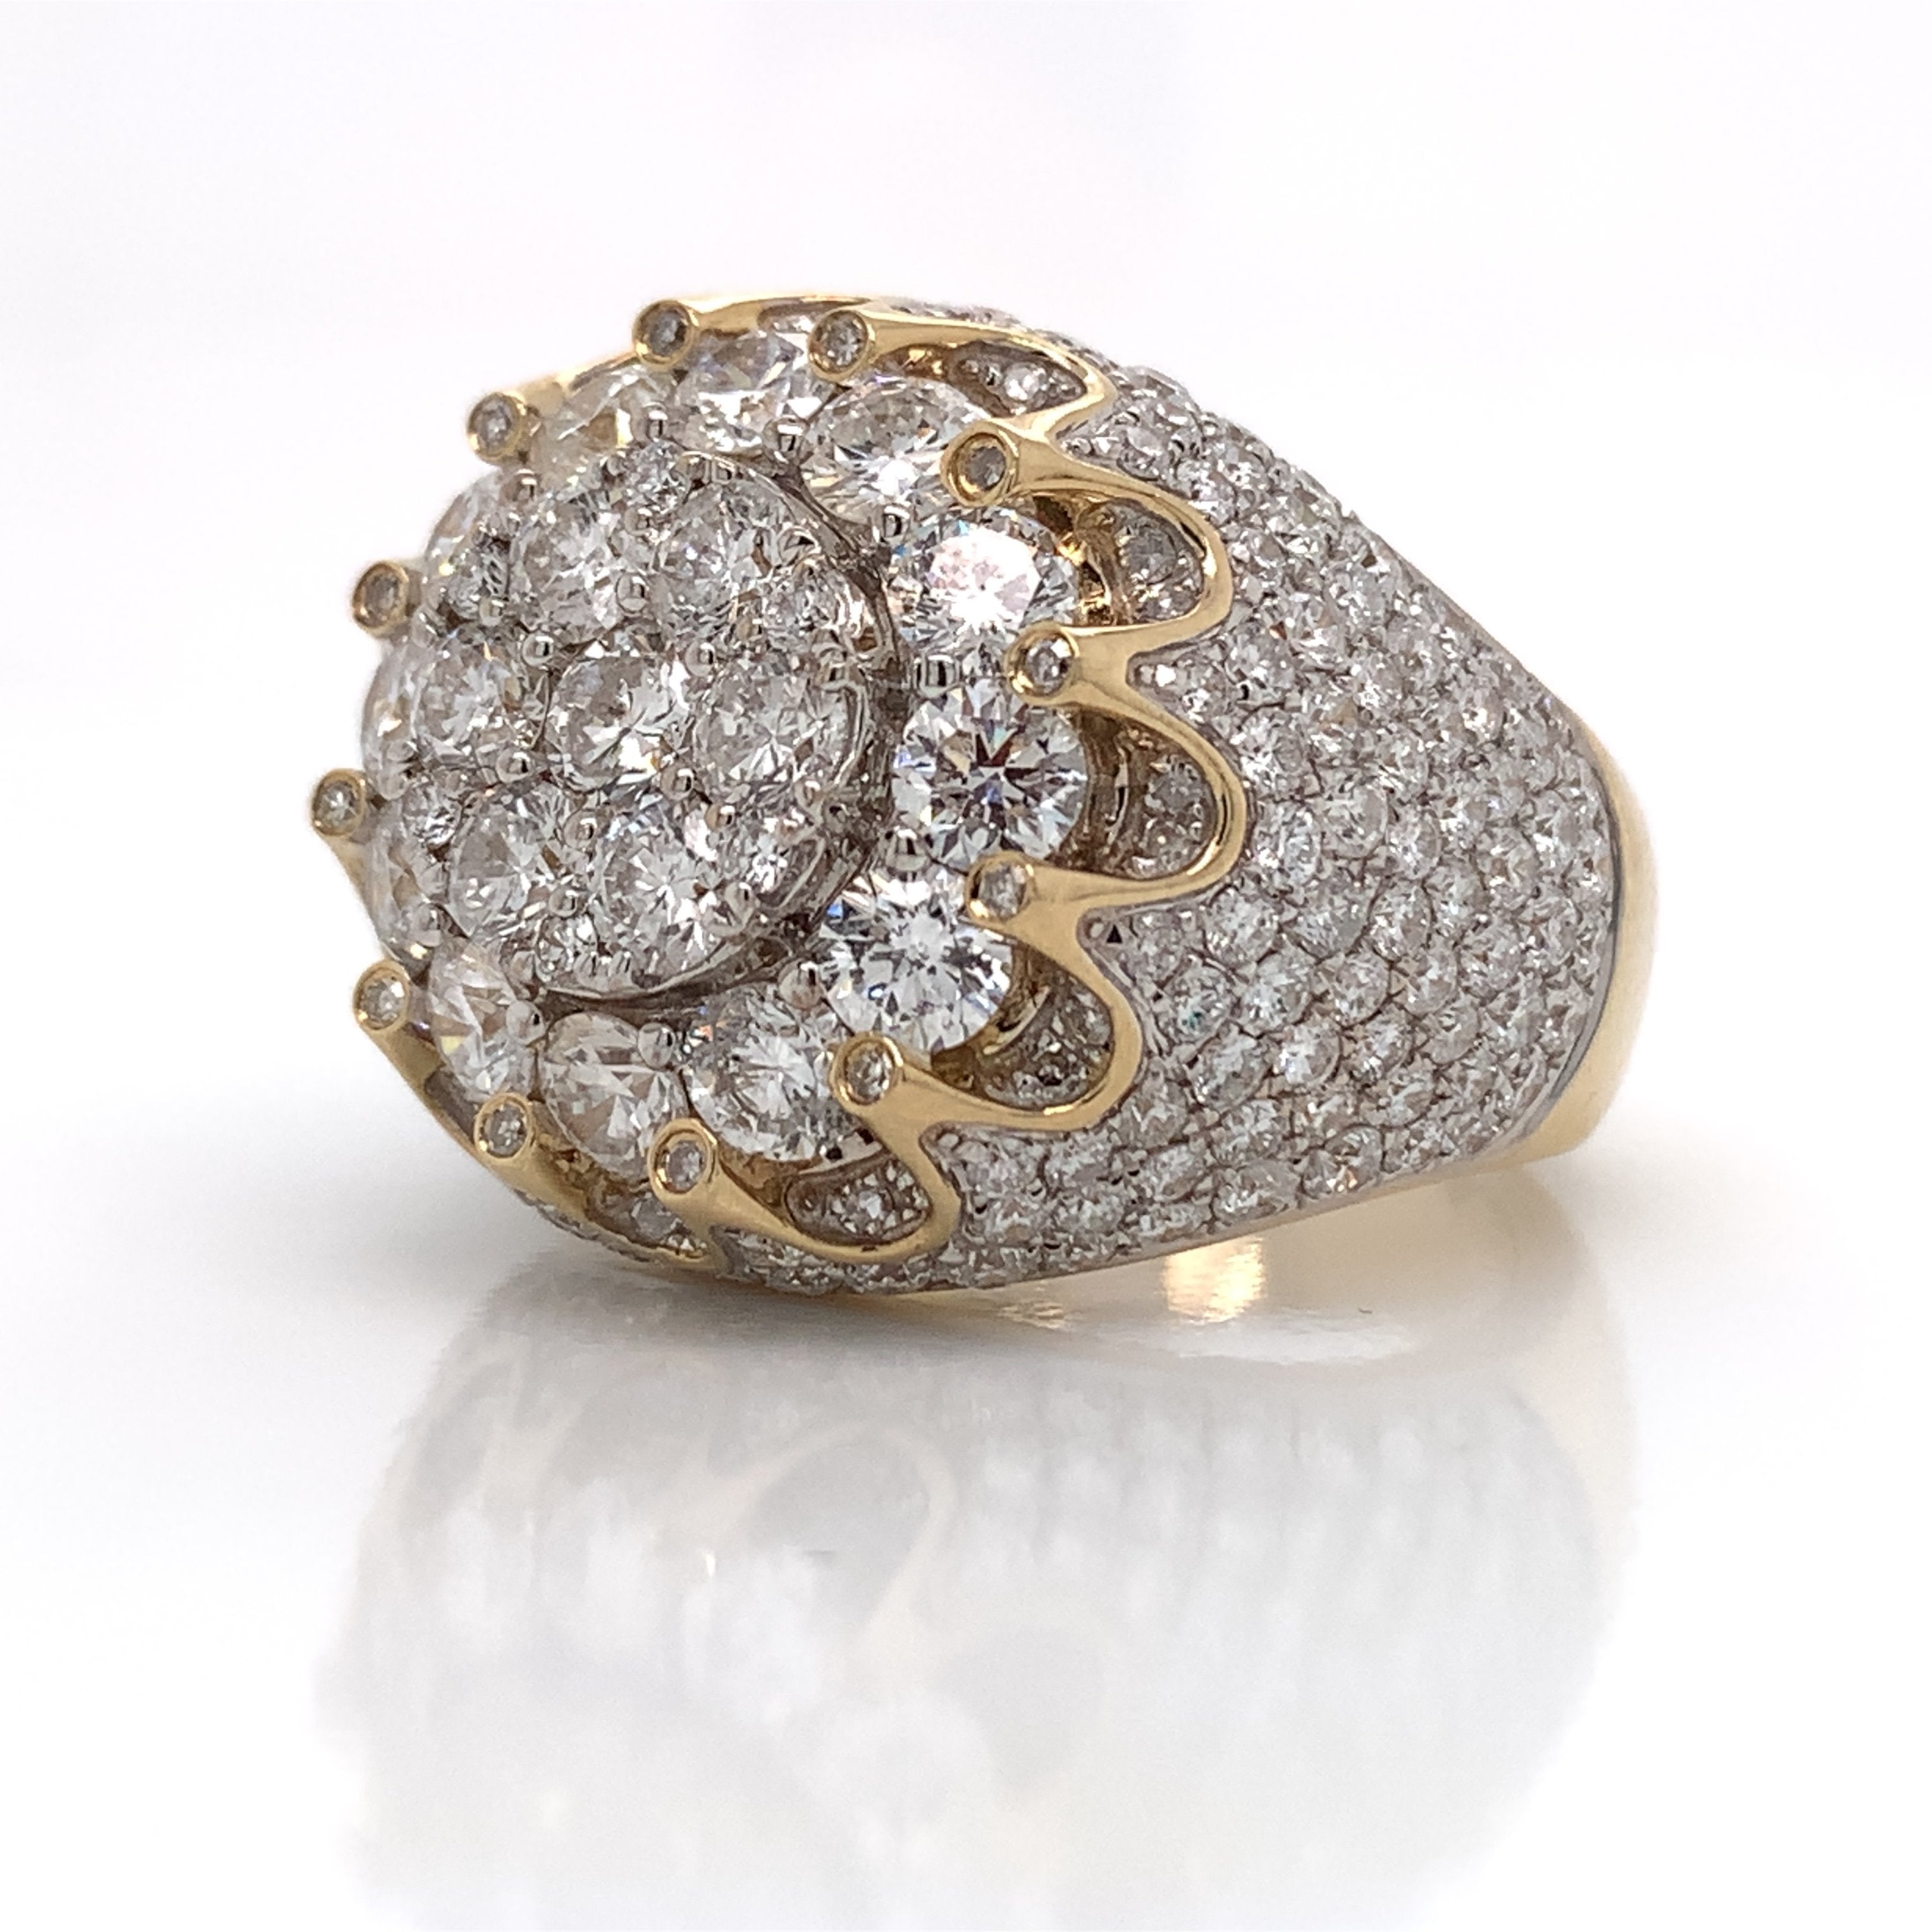 5.00 CT. Diamond Ring 10KT Gold - White Carat Diamonds 